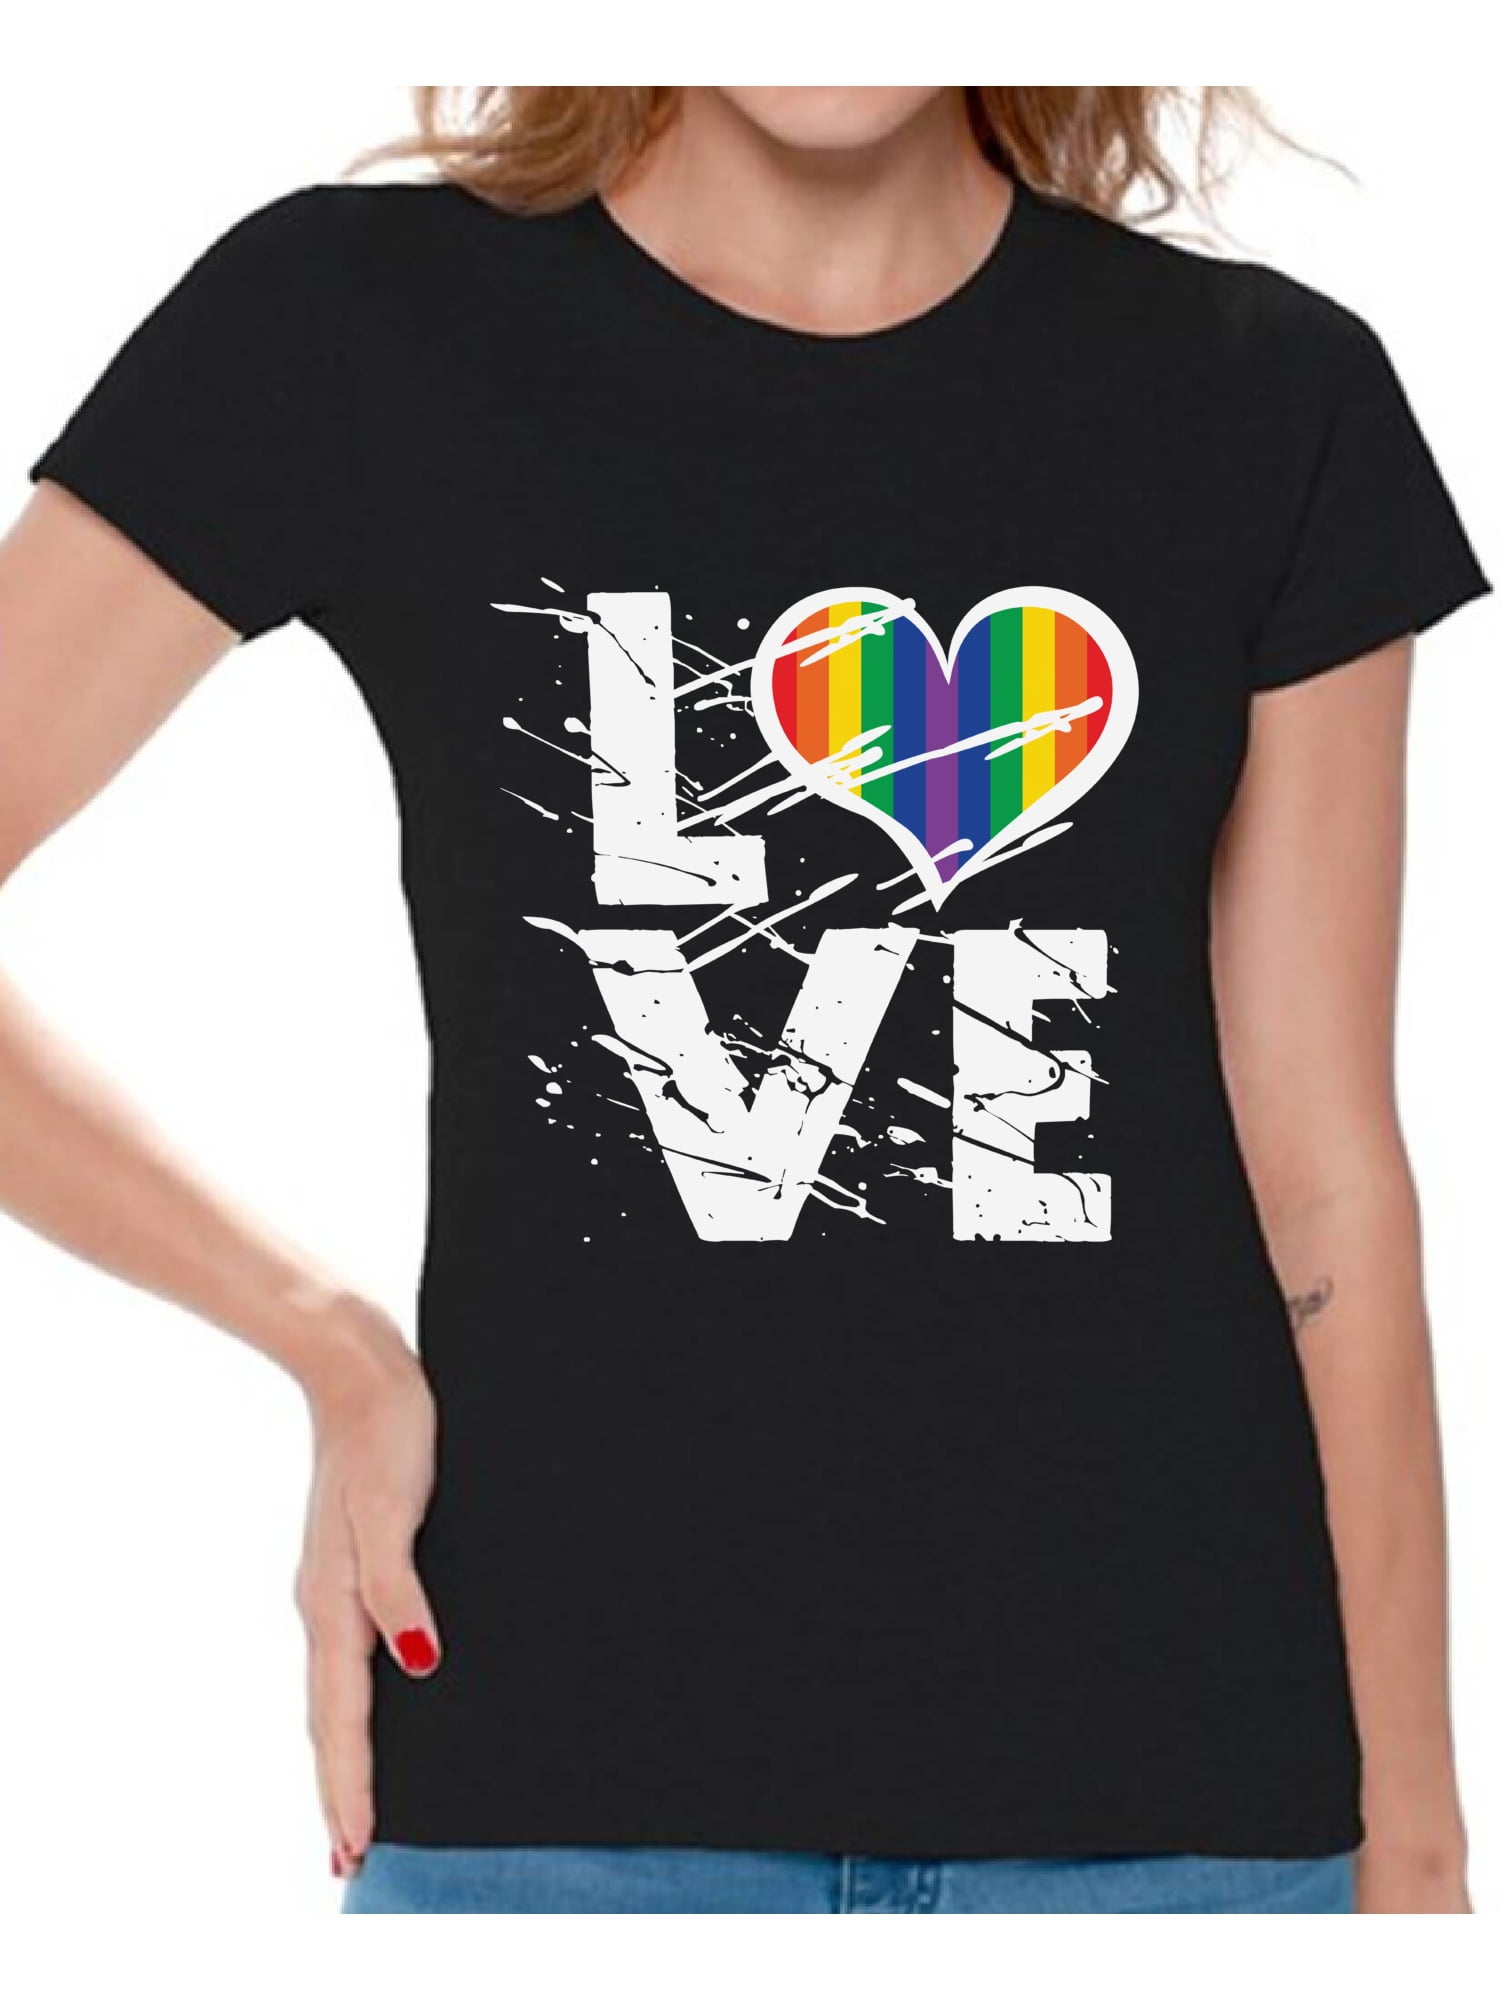 Gay lesbian pride shirt Motivational positive t shirt BE YOU Unisex Jersey Short Sleeve Tee lgbt rainbow tee Inspirational self love tee